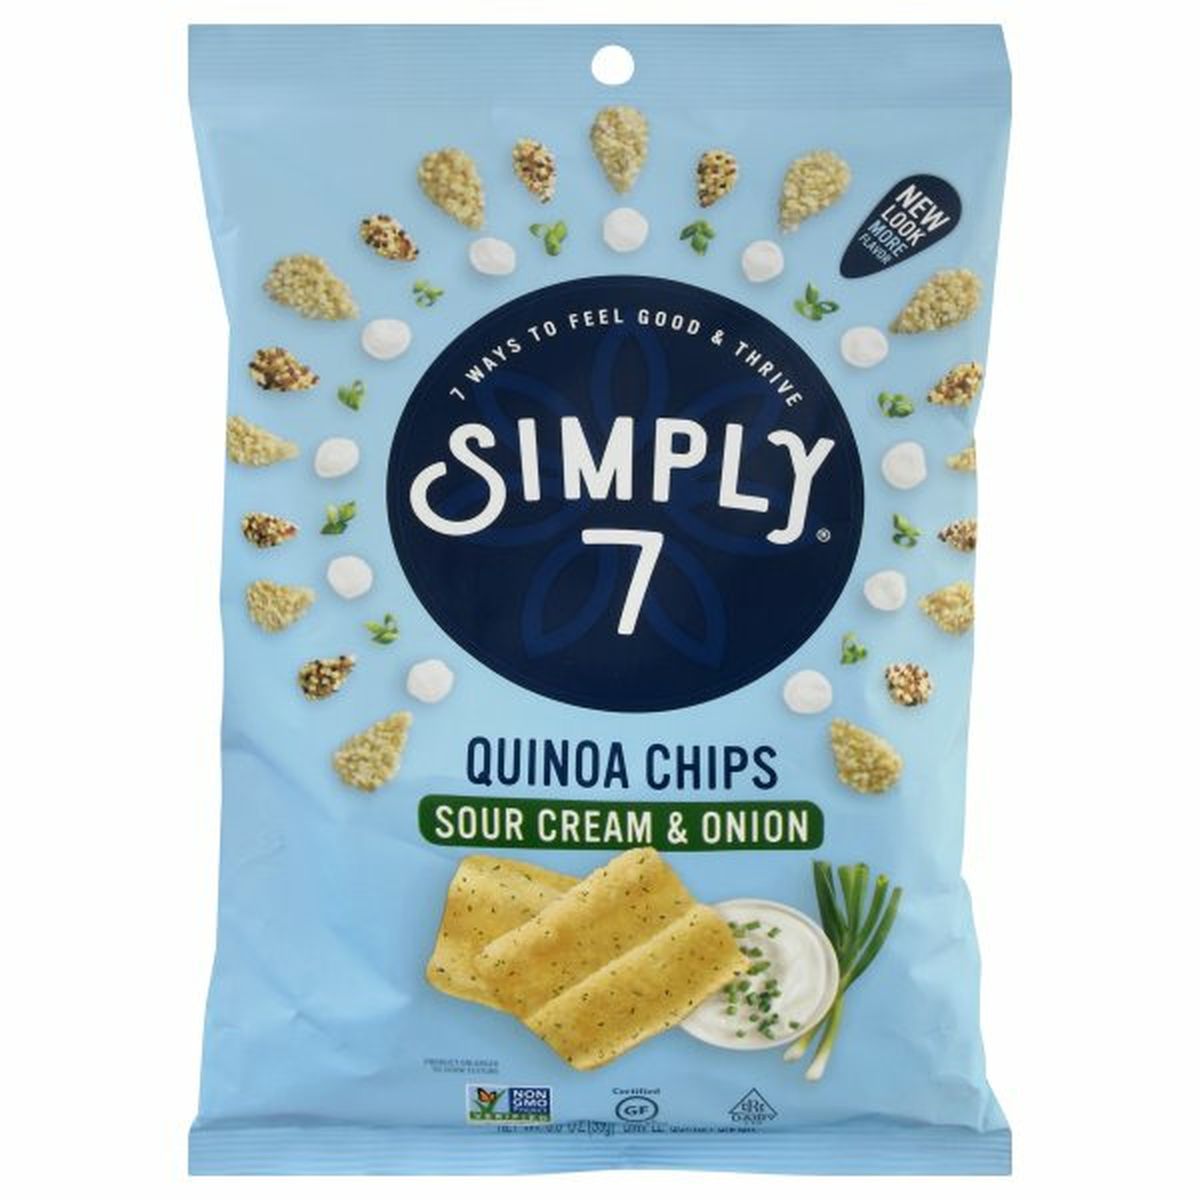 Calories in Simply7 Quinoa Chips, Sour Cream & Onion